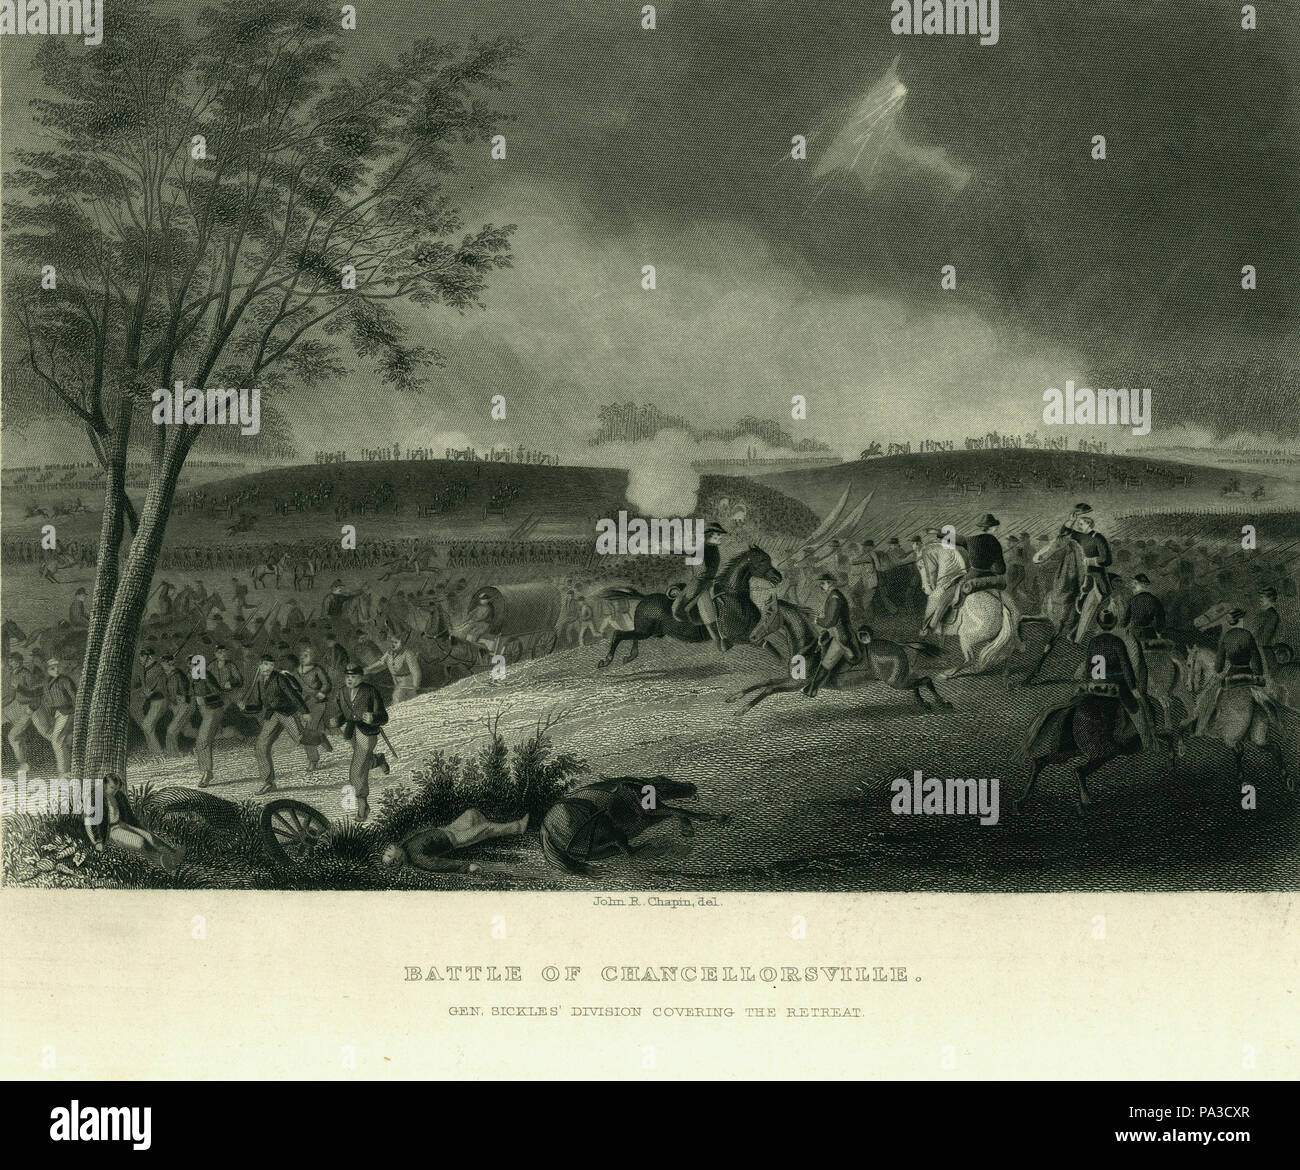 1 &quot;Battle of Chancellorsville. Gen. Sickles' Division Covering the Retreat.&quot; Stock Photo